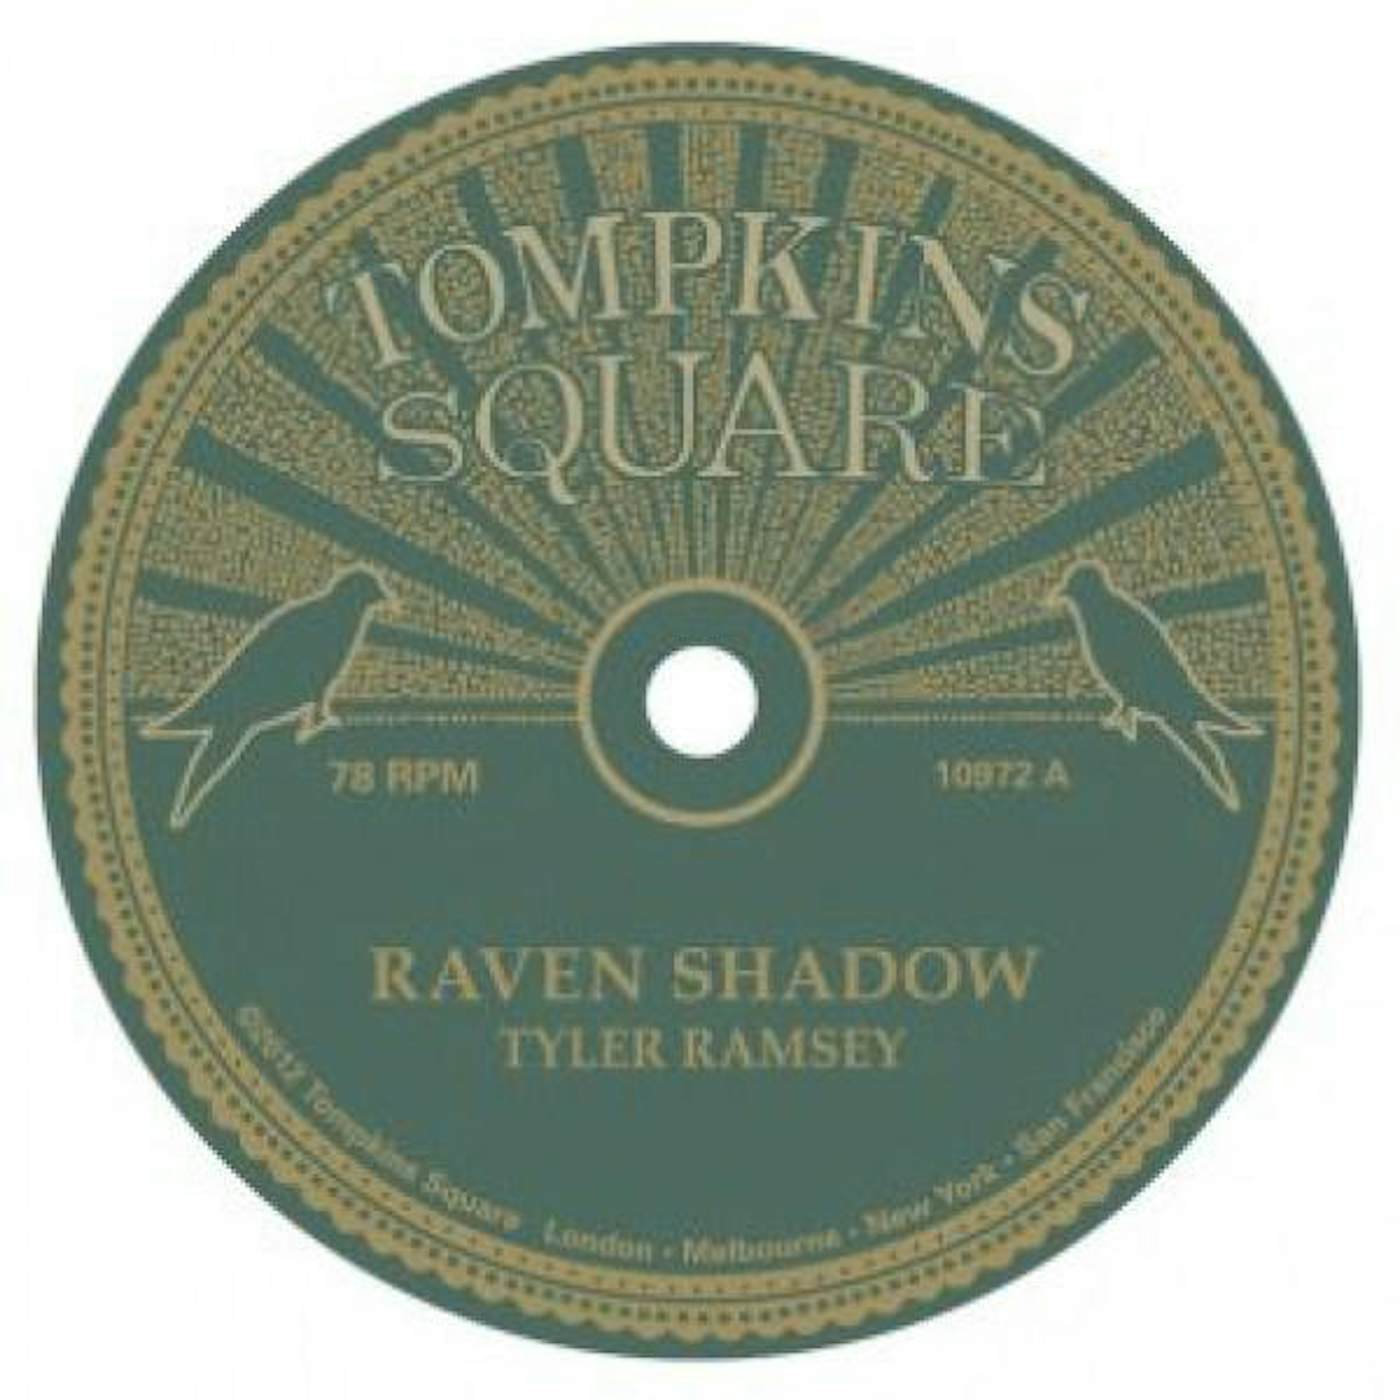 Tyler Ramsey - Band Of Horses 'Raven Shadow-Black Pines -78rpm' Vinyl Record